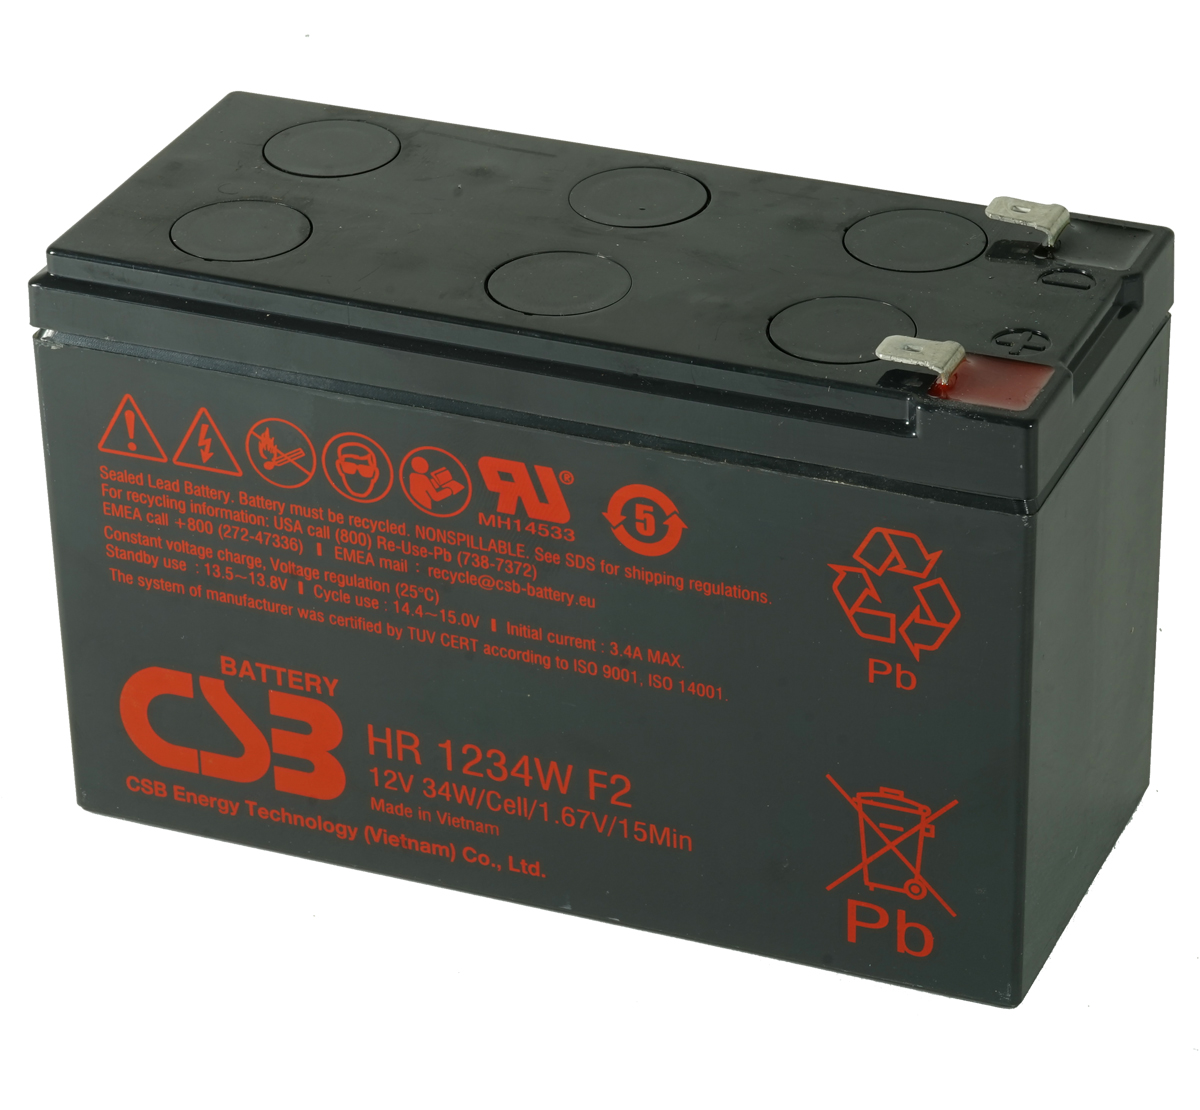 MDSV212 UPS Battery Kit - Replaces APC RBCV212